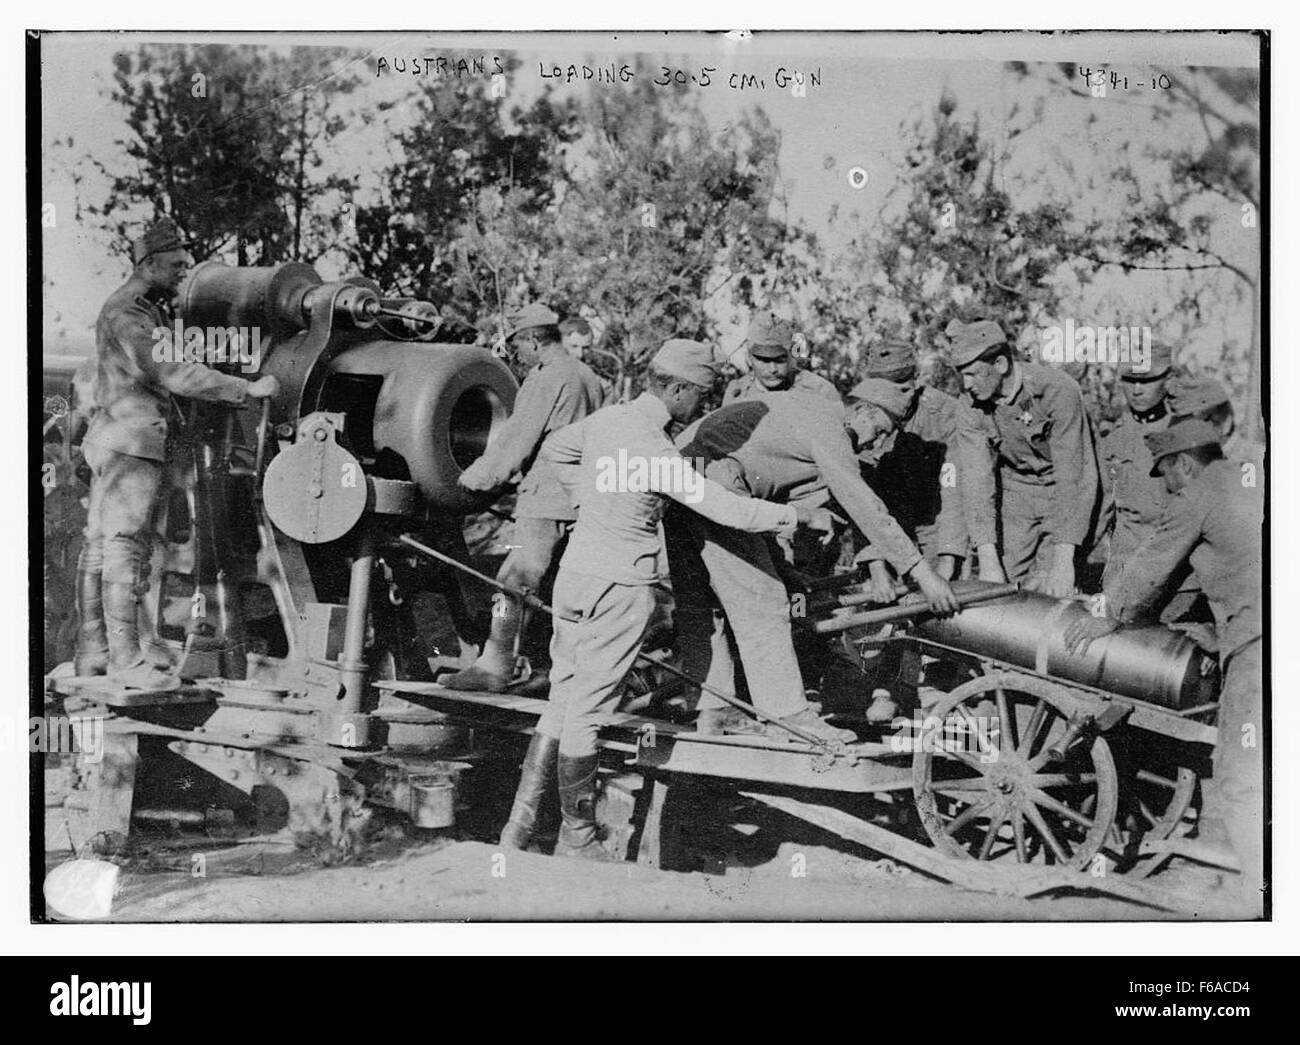 Austrians loading 305 cm gun Stock Photo - Alamy